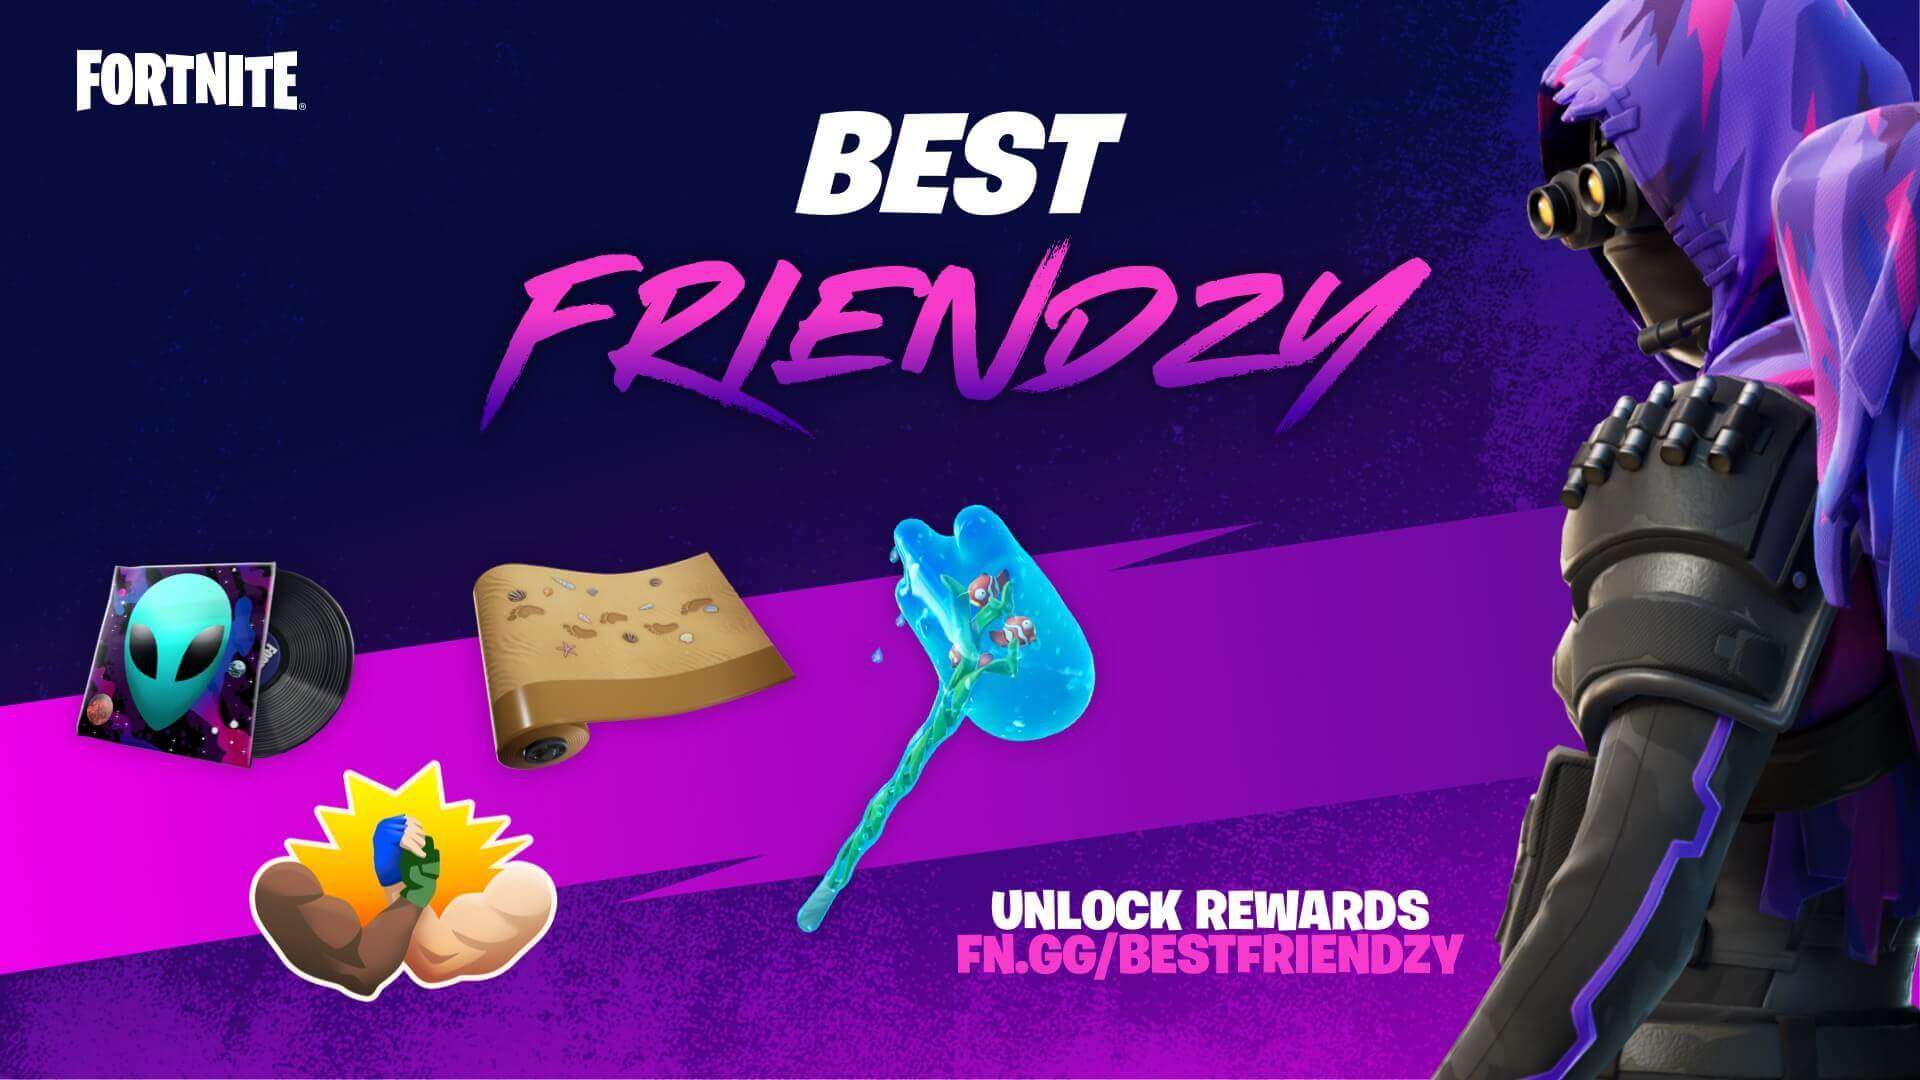 fortnite best friendzy rewards